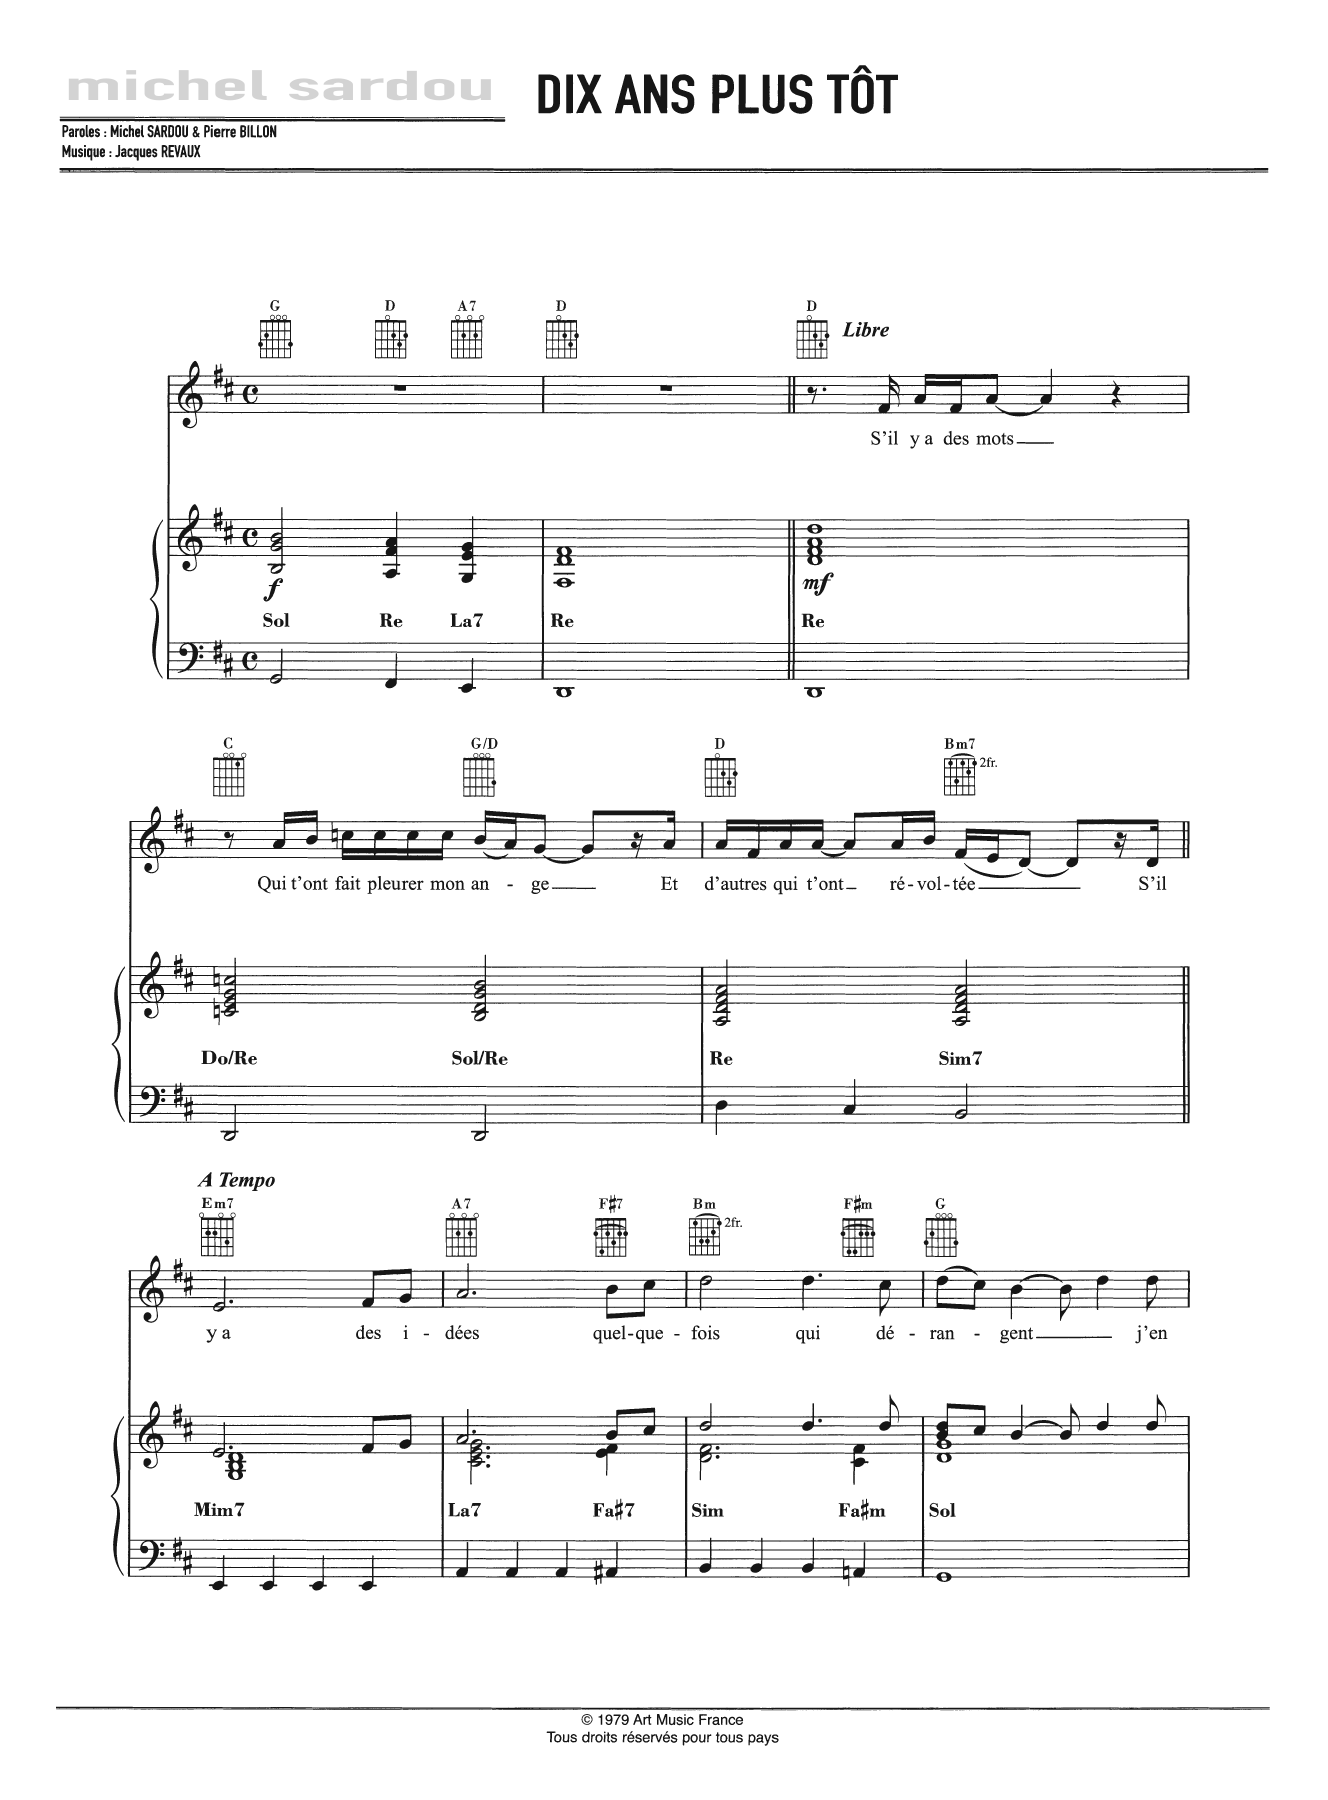 Michel Sardou Dix Ans Plus Tot Sheet Music Notes & Chords for Piano, Vocal & Guitar - Download or Print PDF